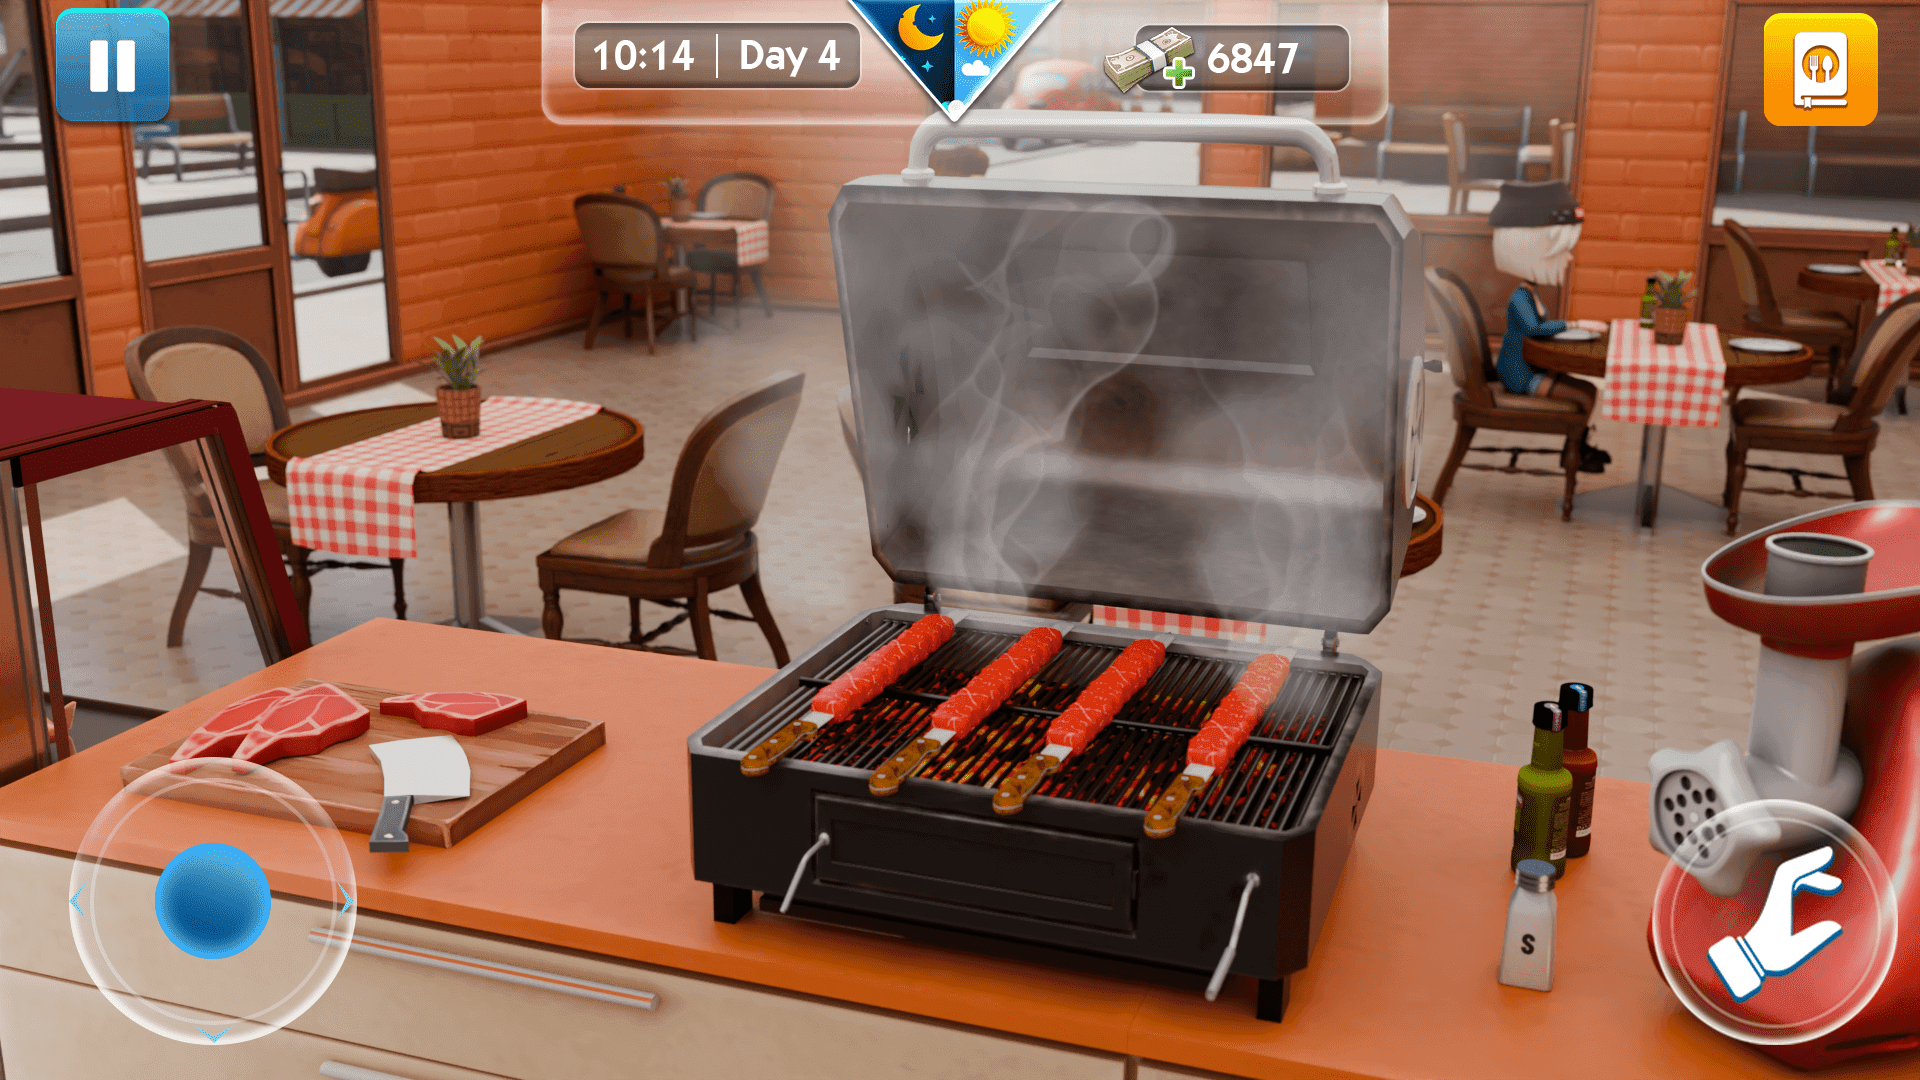 Screenshot 1 of permainan simulator chef makanan kebab 2.0.8